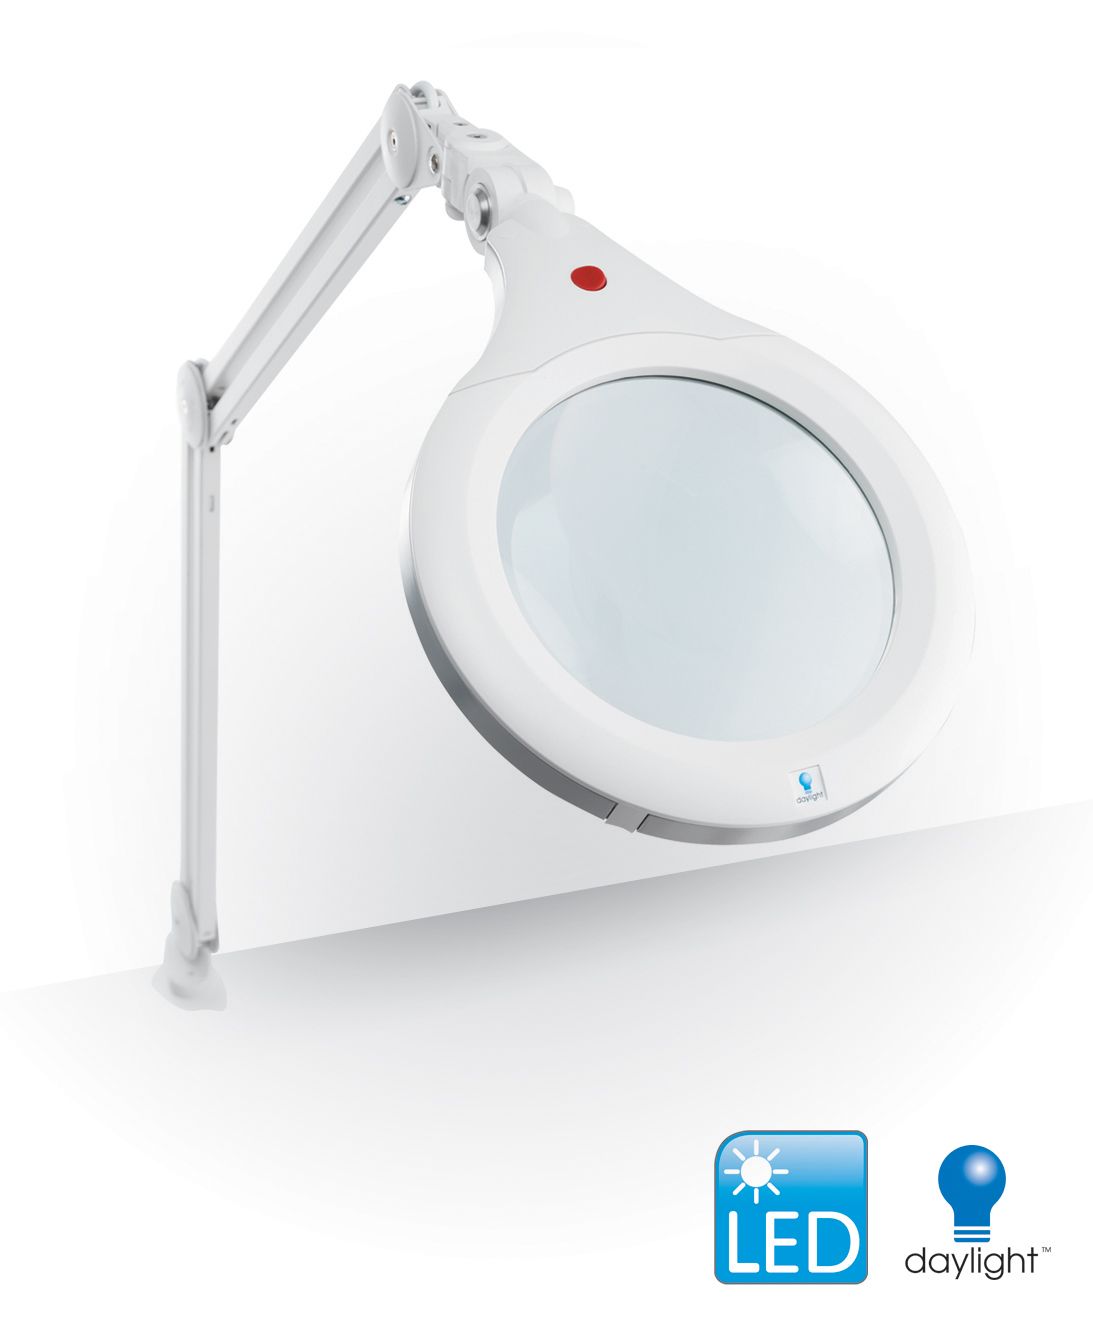 Daylight U25080 LED UltraSlim Magnifying Lamp XR Main Product Image